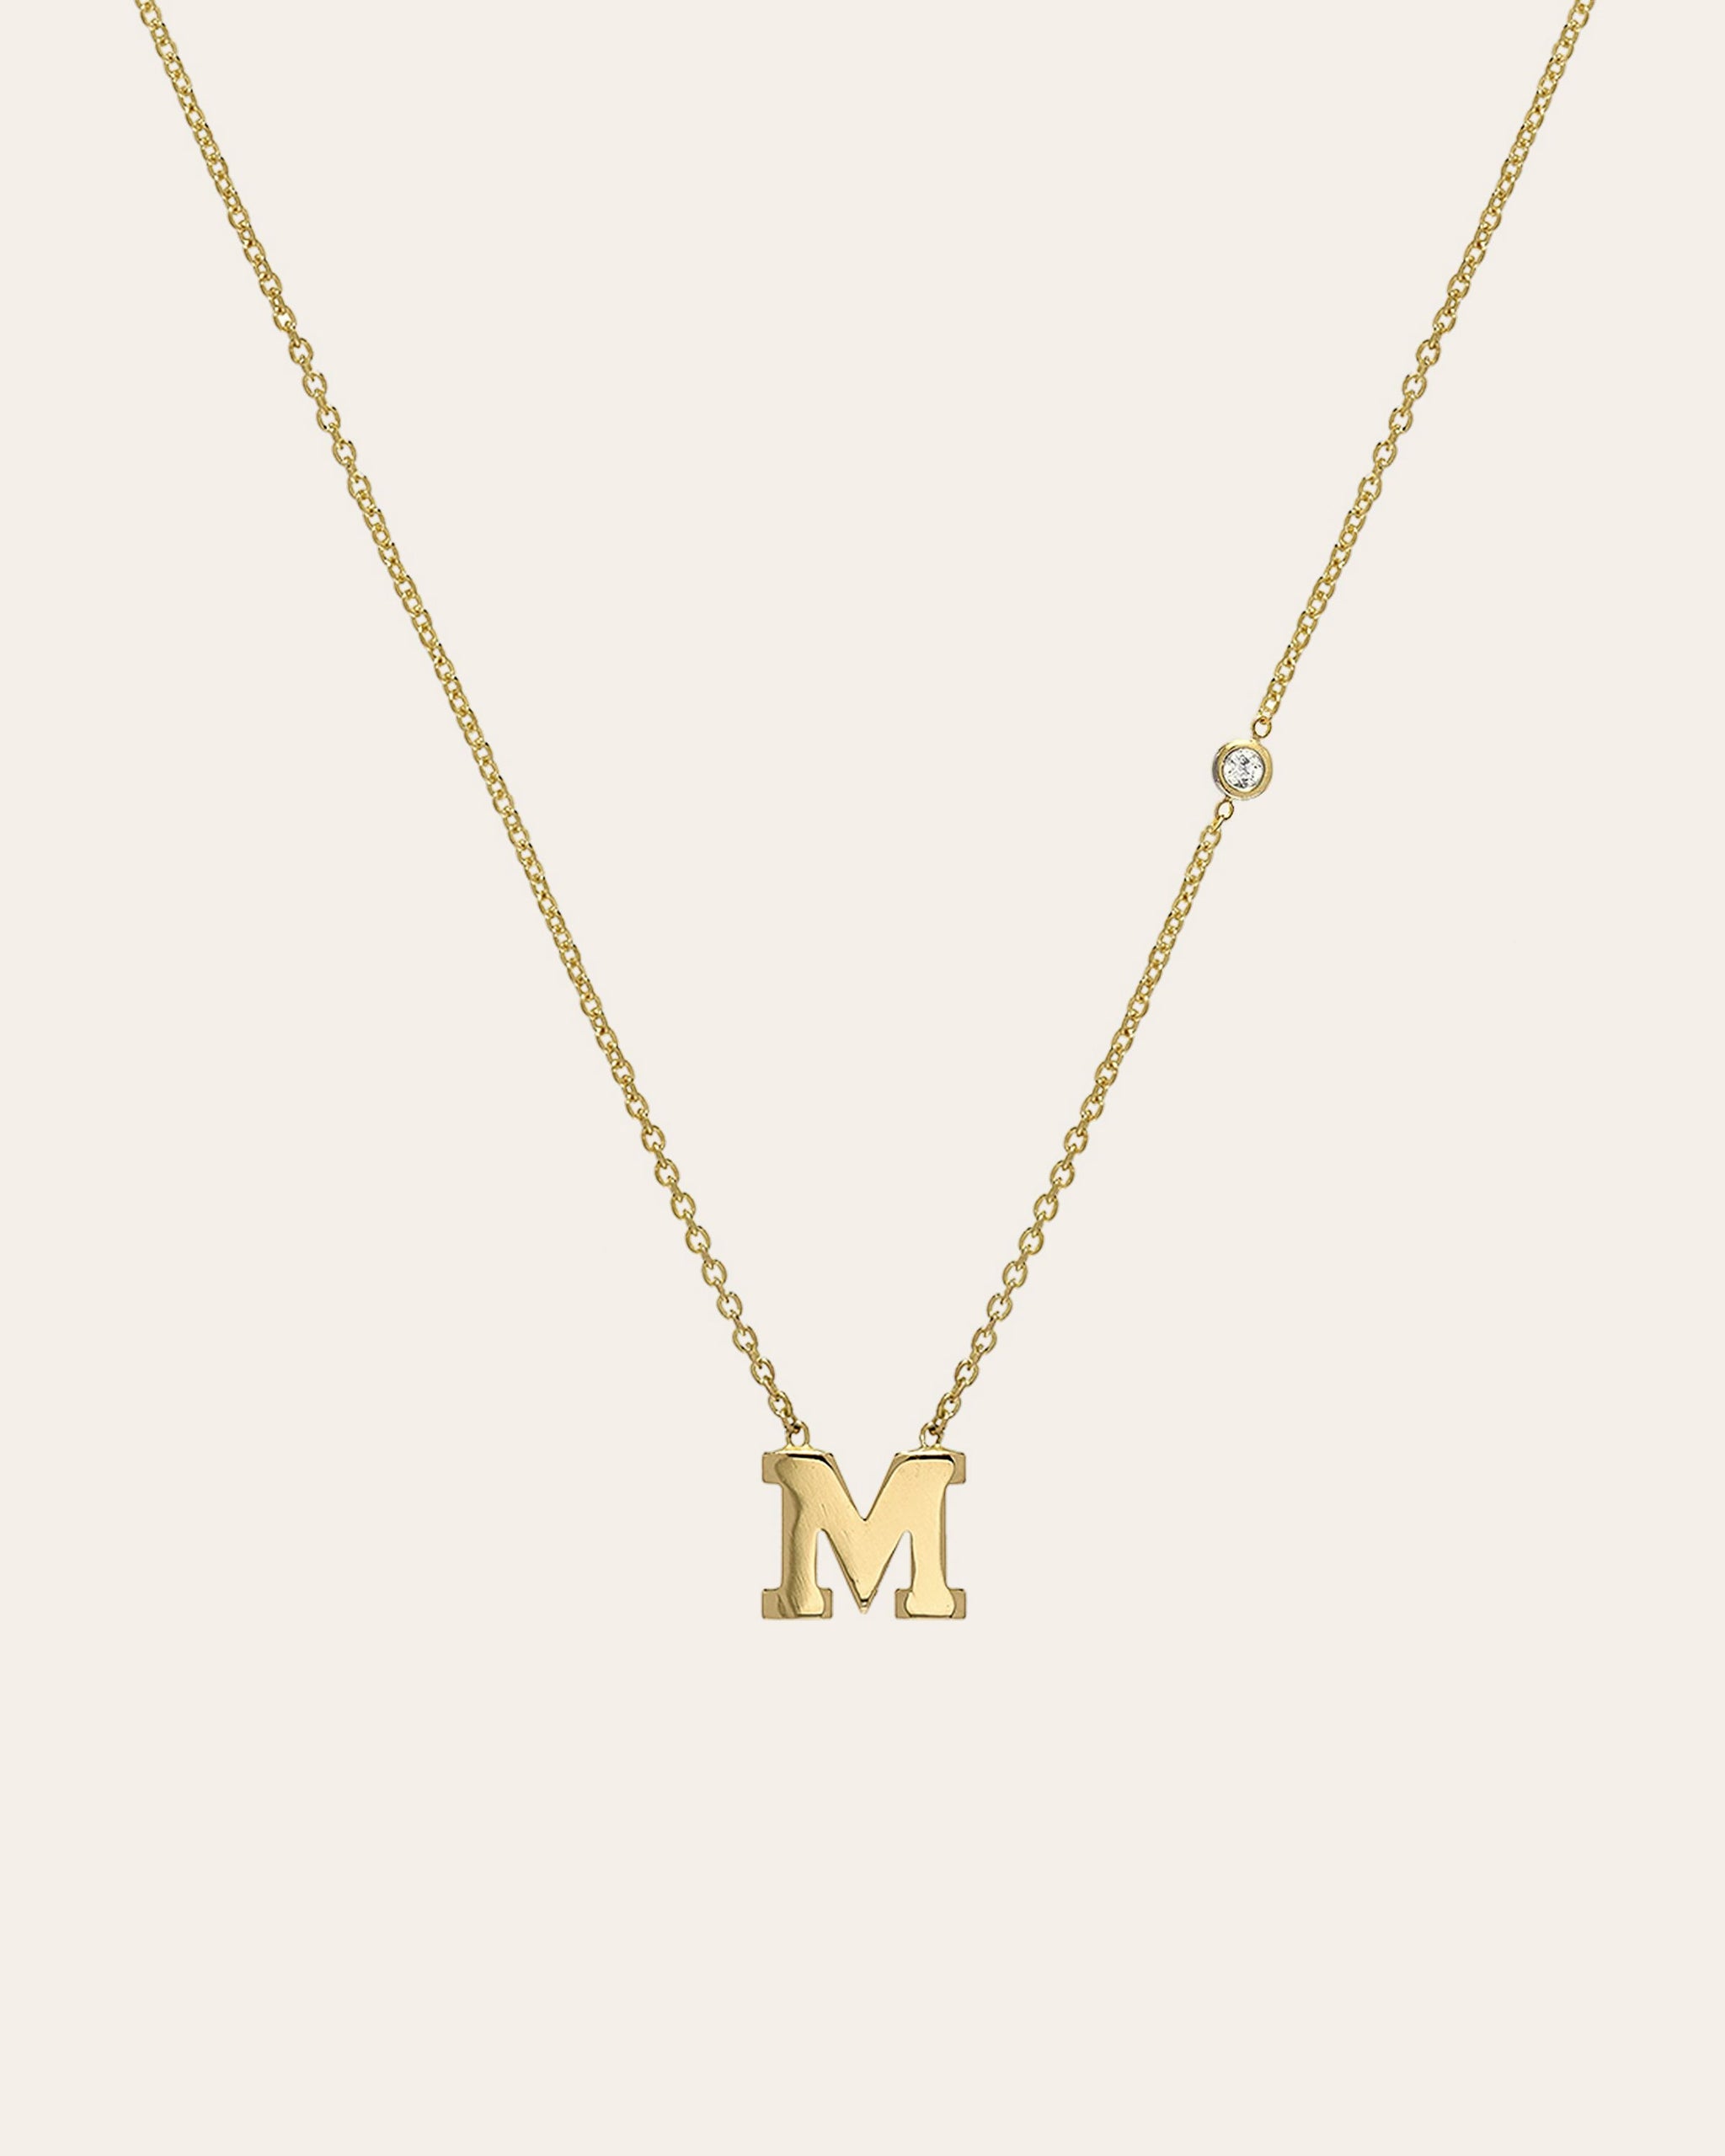 Zoe Lev Jewelry - 14k Gold Initial and Bezel Diamond Necklace